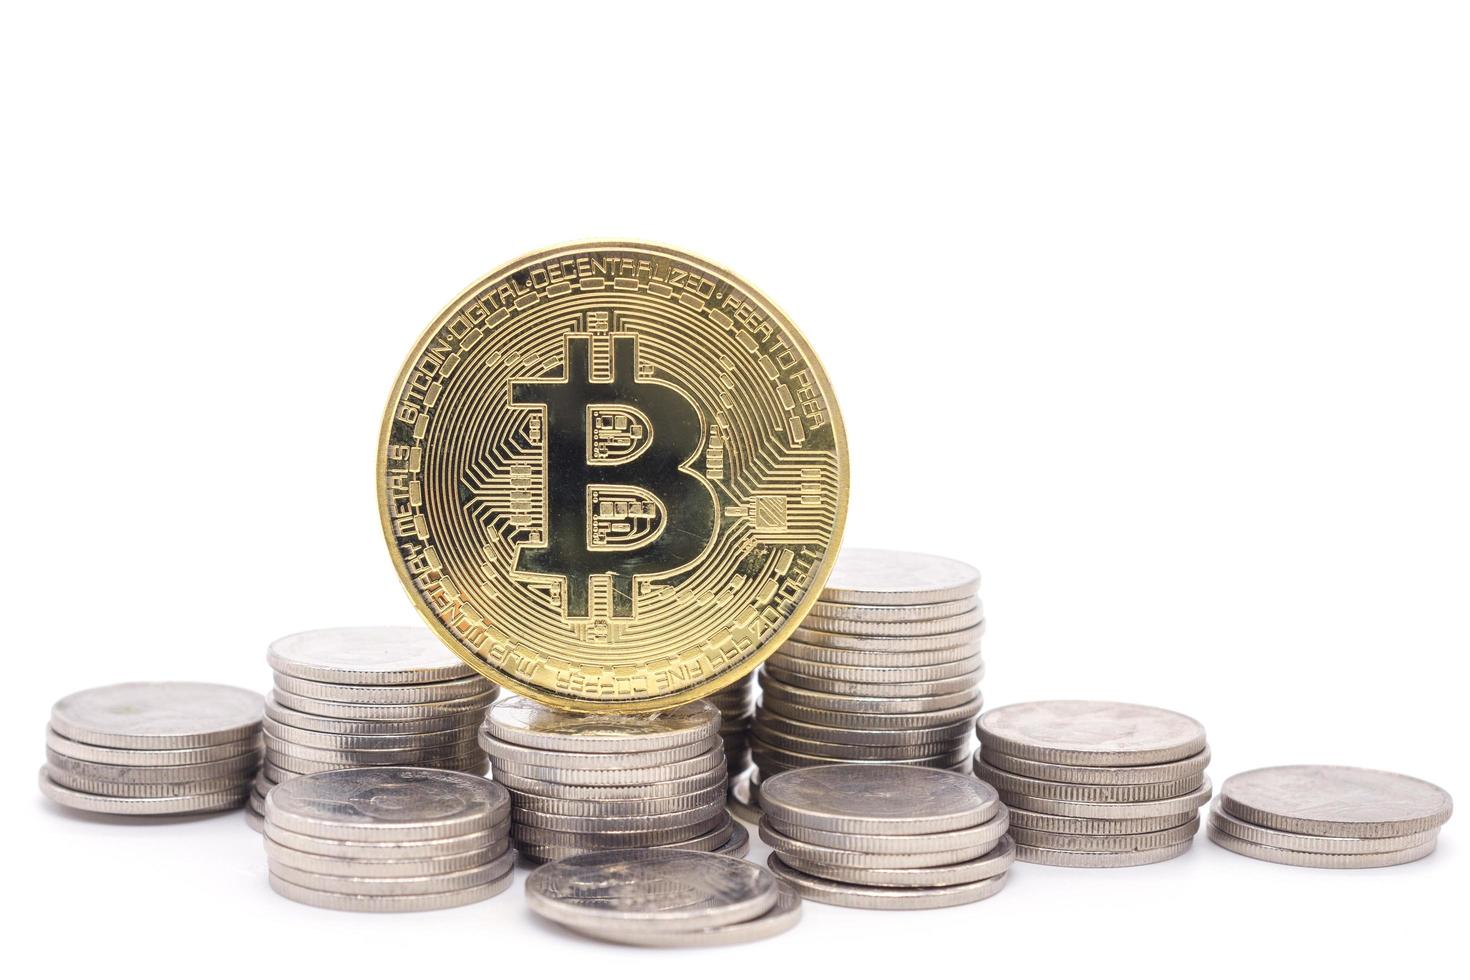 bitcoin en munten op witte achtergrond foto